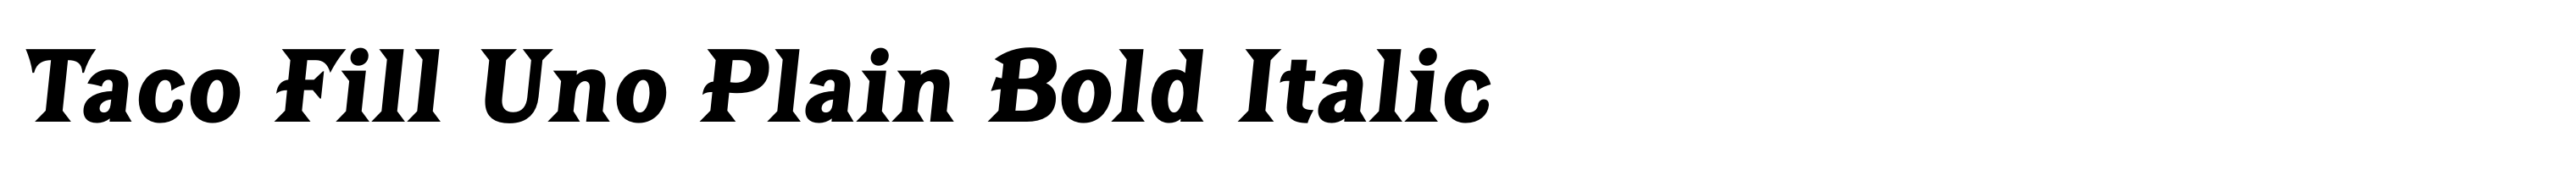 Taco Fill Uno Plain Bold Italic